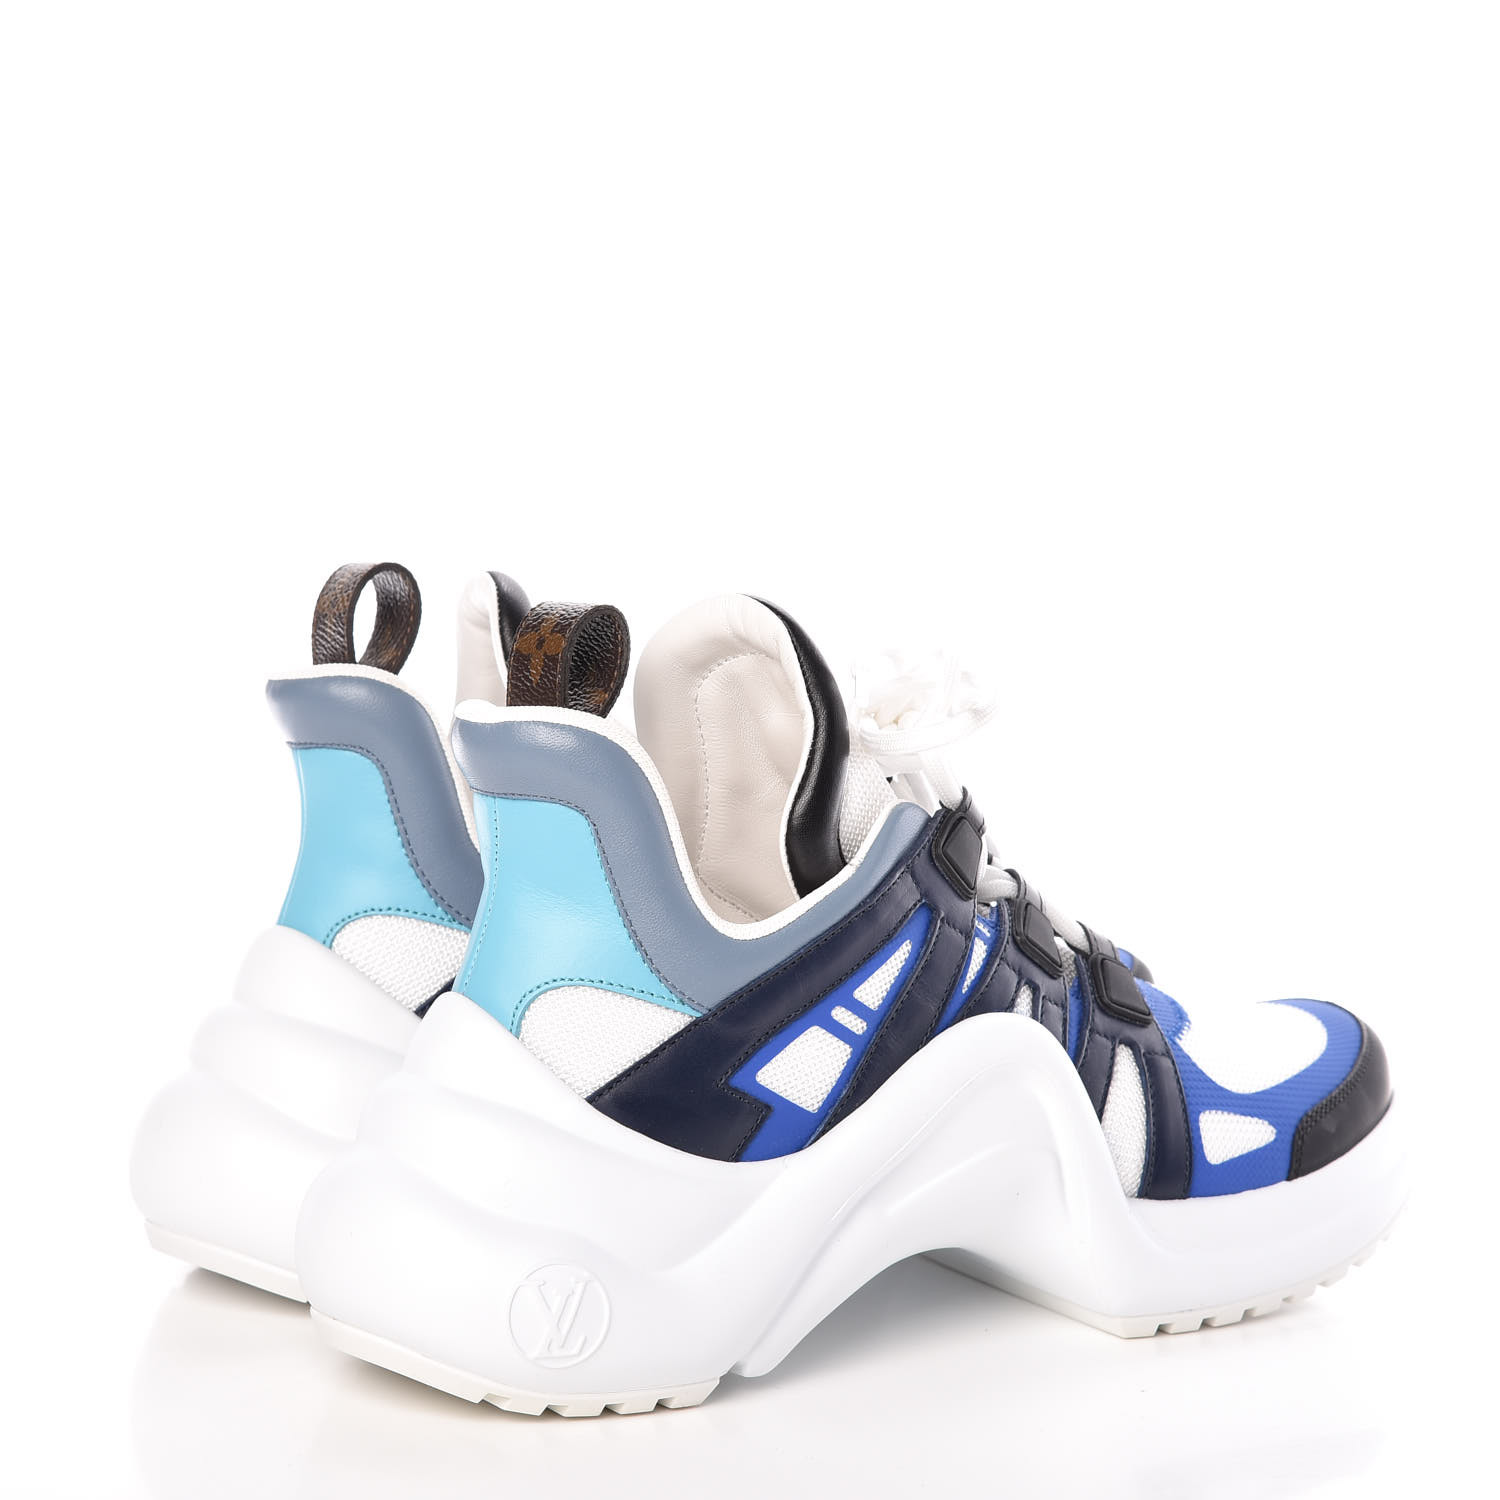 LOUIS VUITTON Calfskin Technical Nylon LV Archlight Sneakers 38 Blue Roi 397137